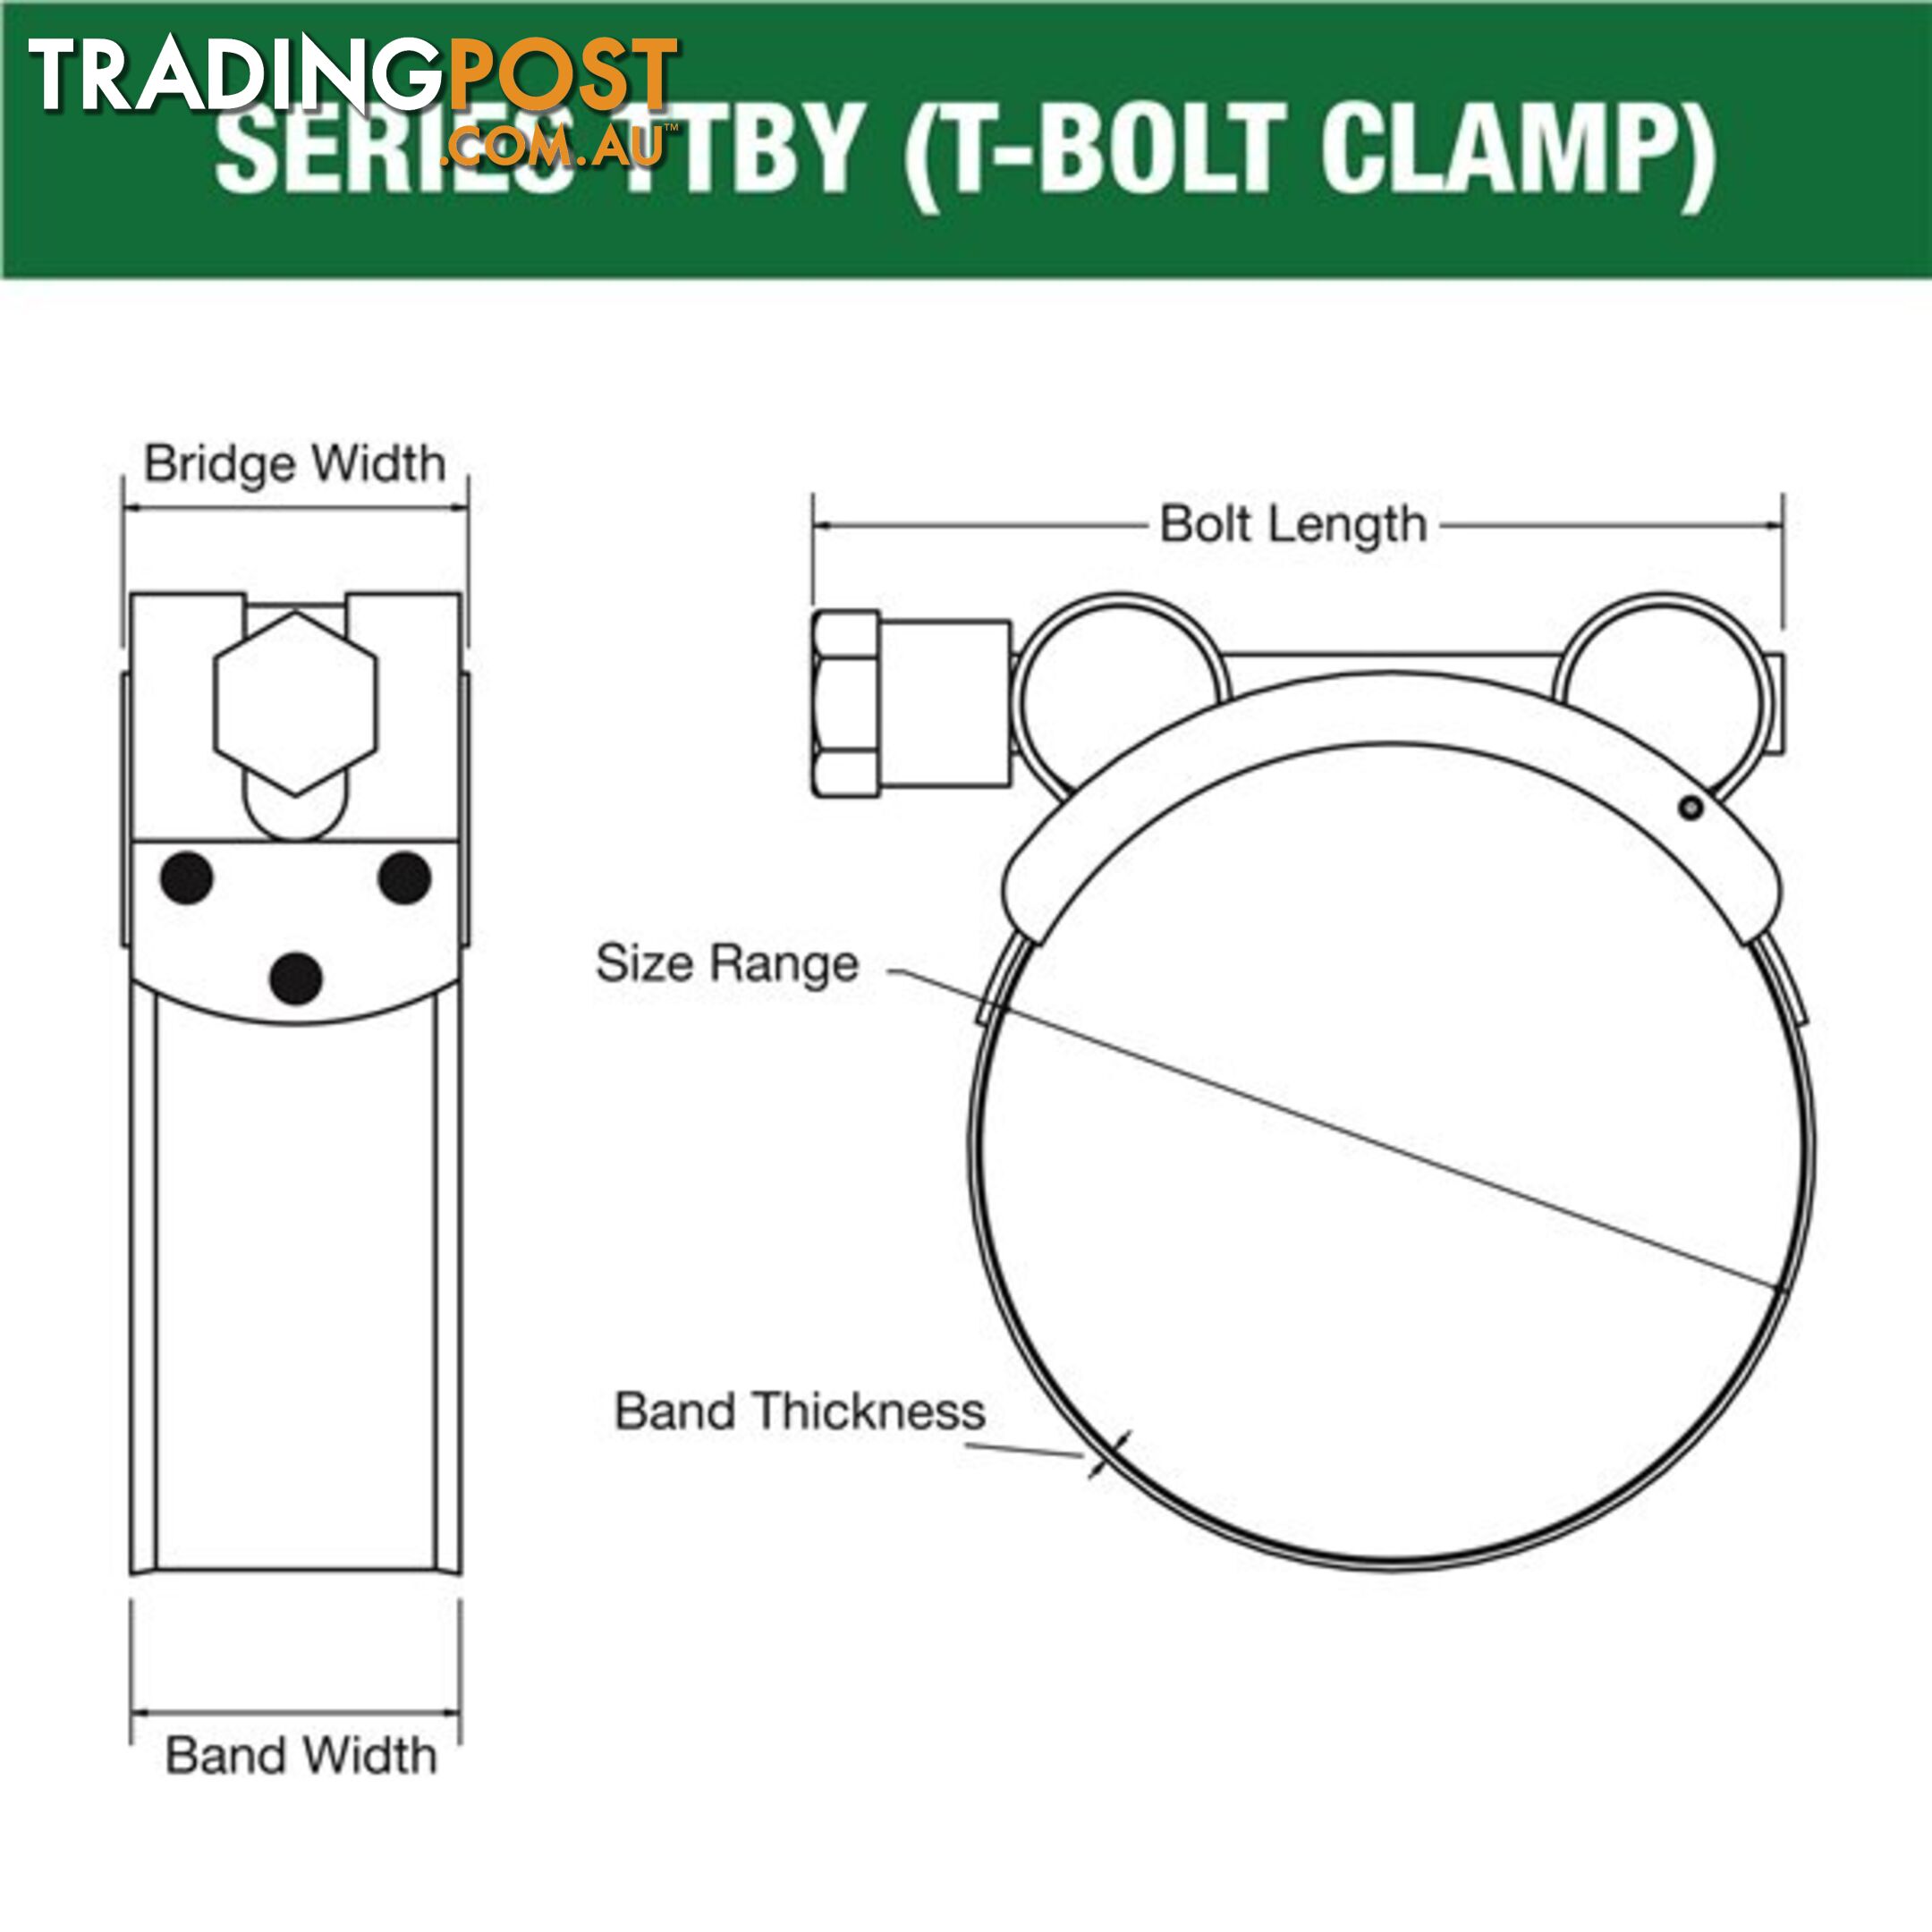 Tridon T-Bolt Hose Clamp 21mm â 23mm Part Stainless Solid Band 10pk SKU - TTBY21-23P